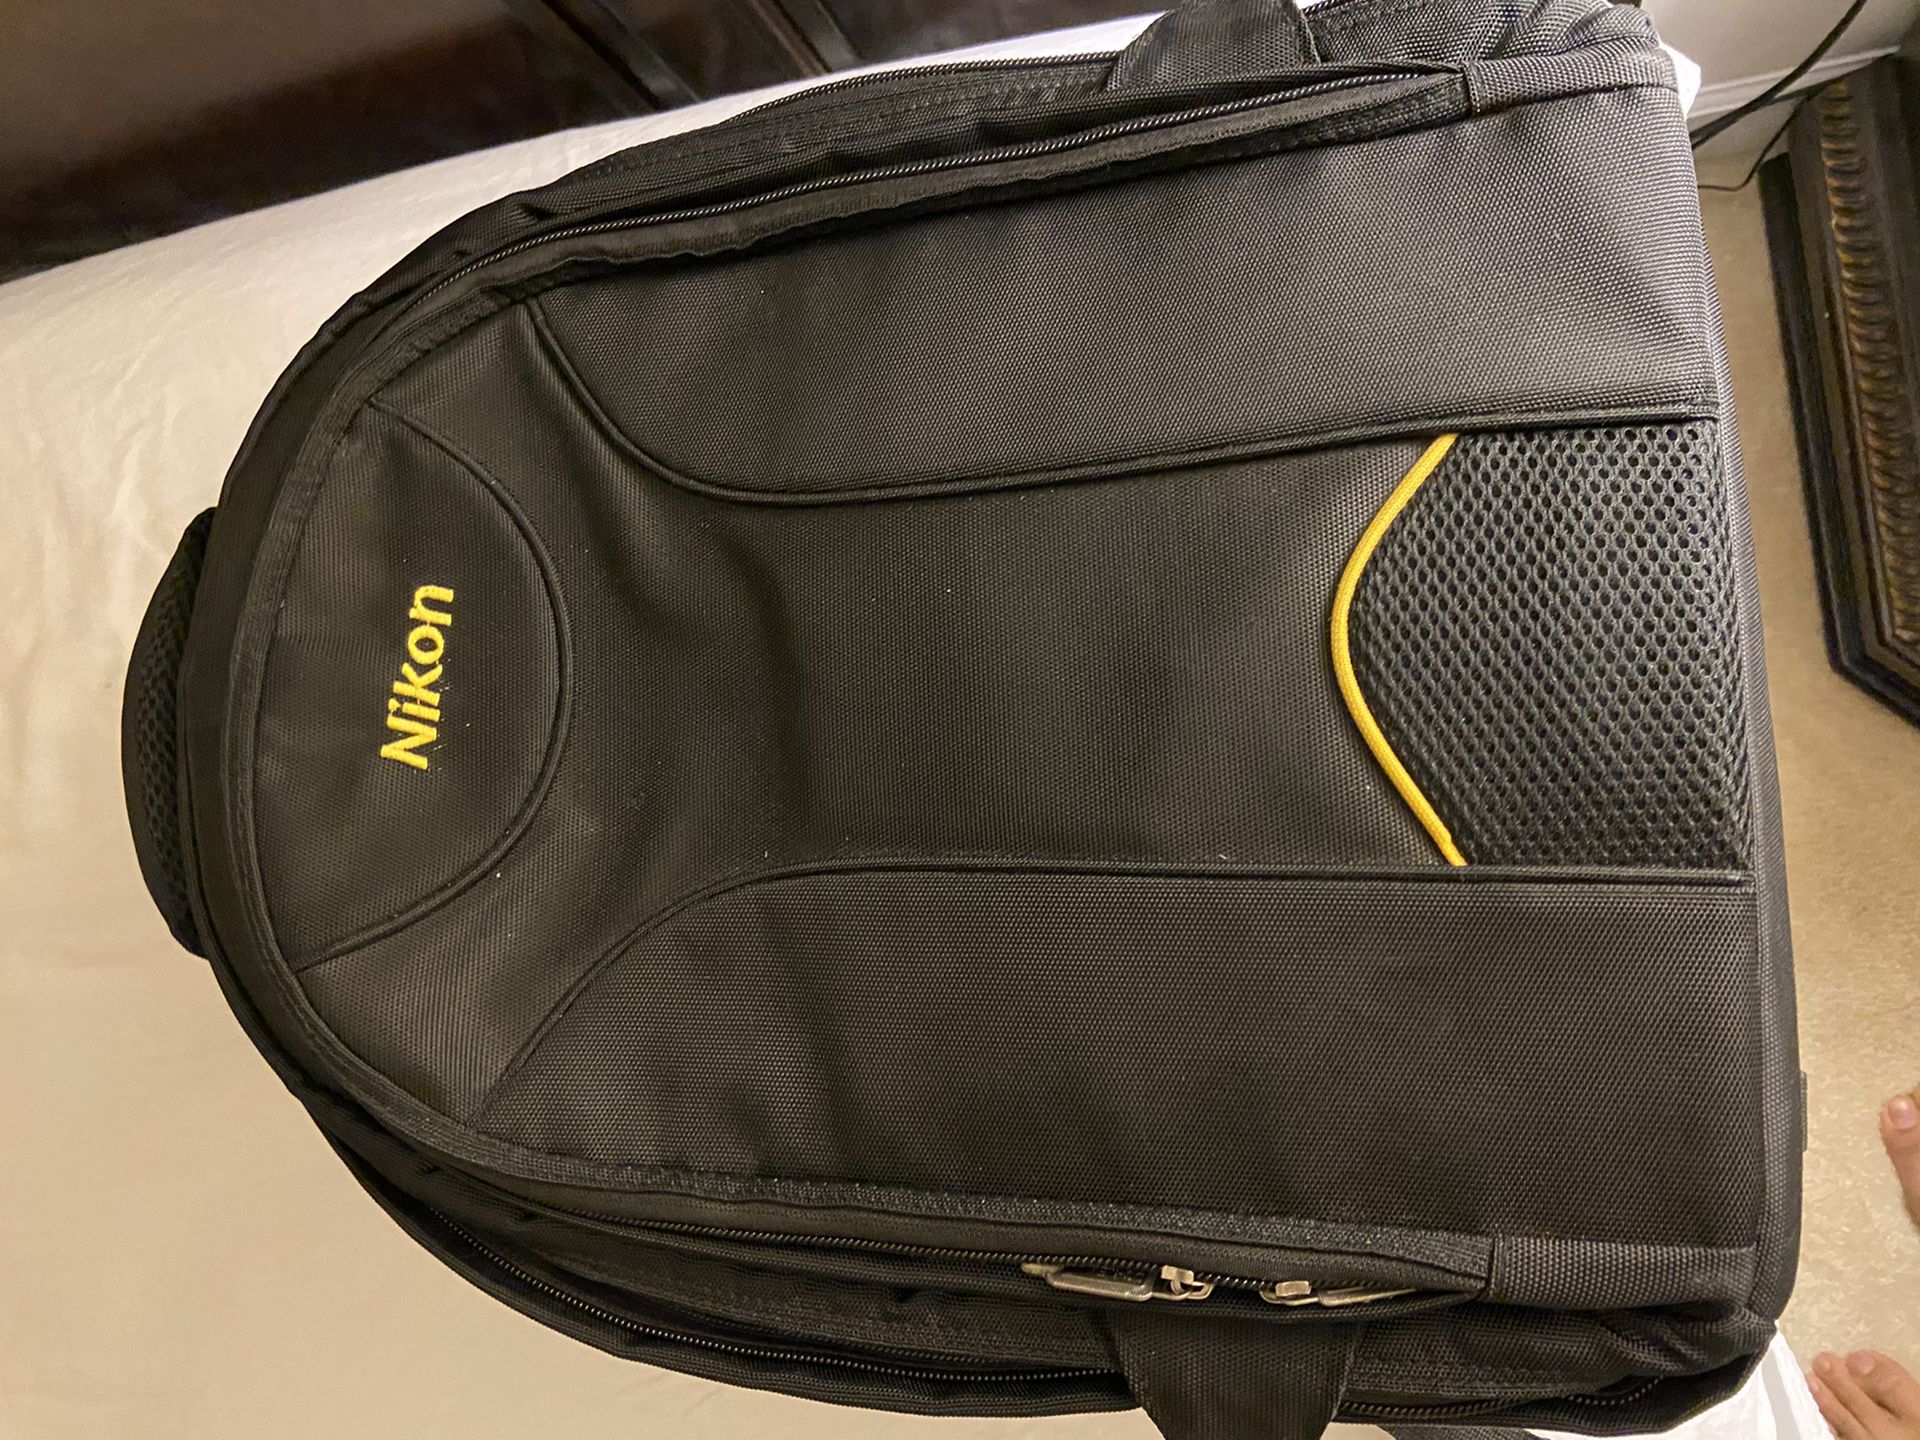 Nikon backpack DSLR Camera bag